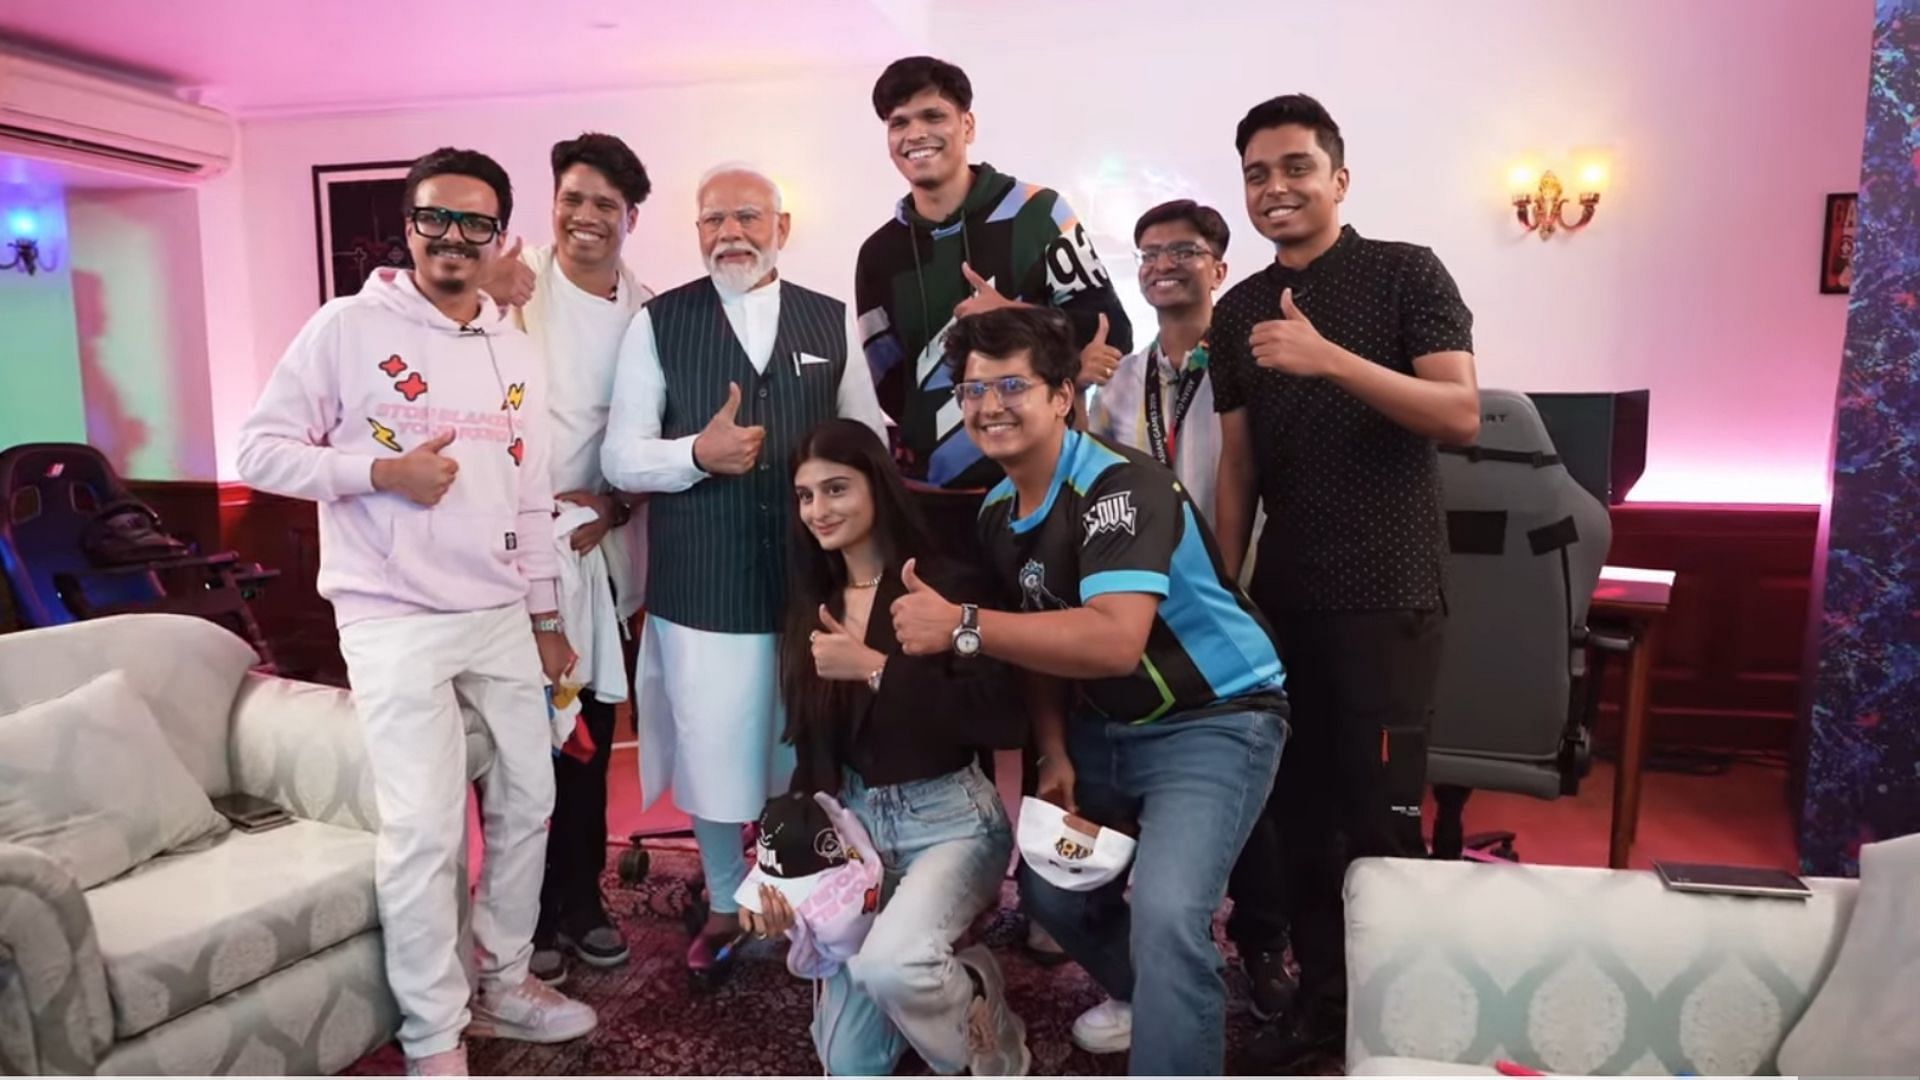 Prime Minister Narendra Modi meets with Indian gamers (Image via YouTube/Narendra Modi)